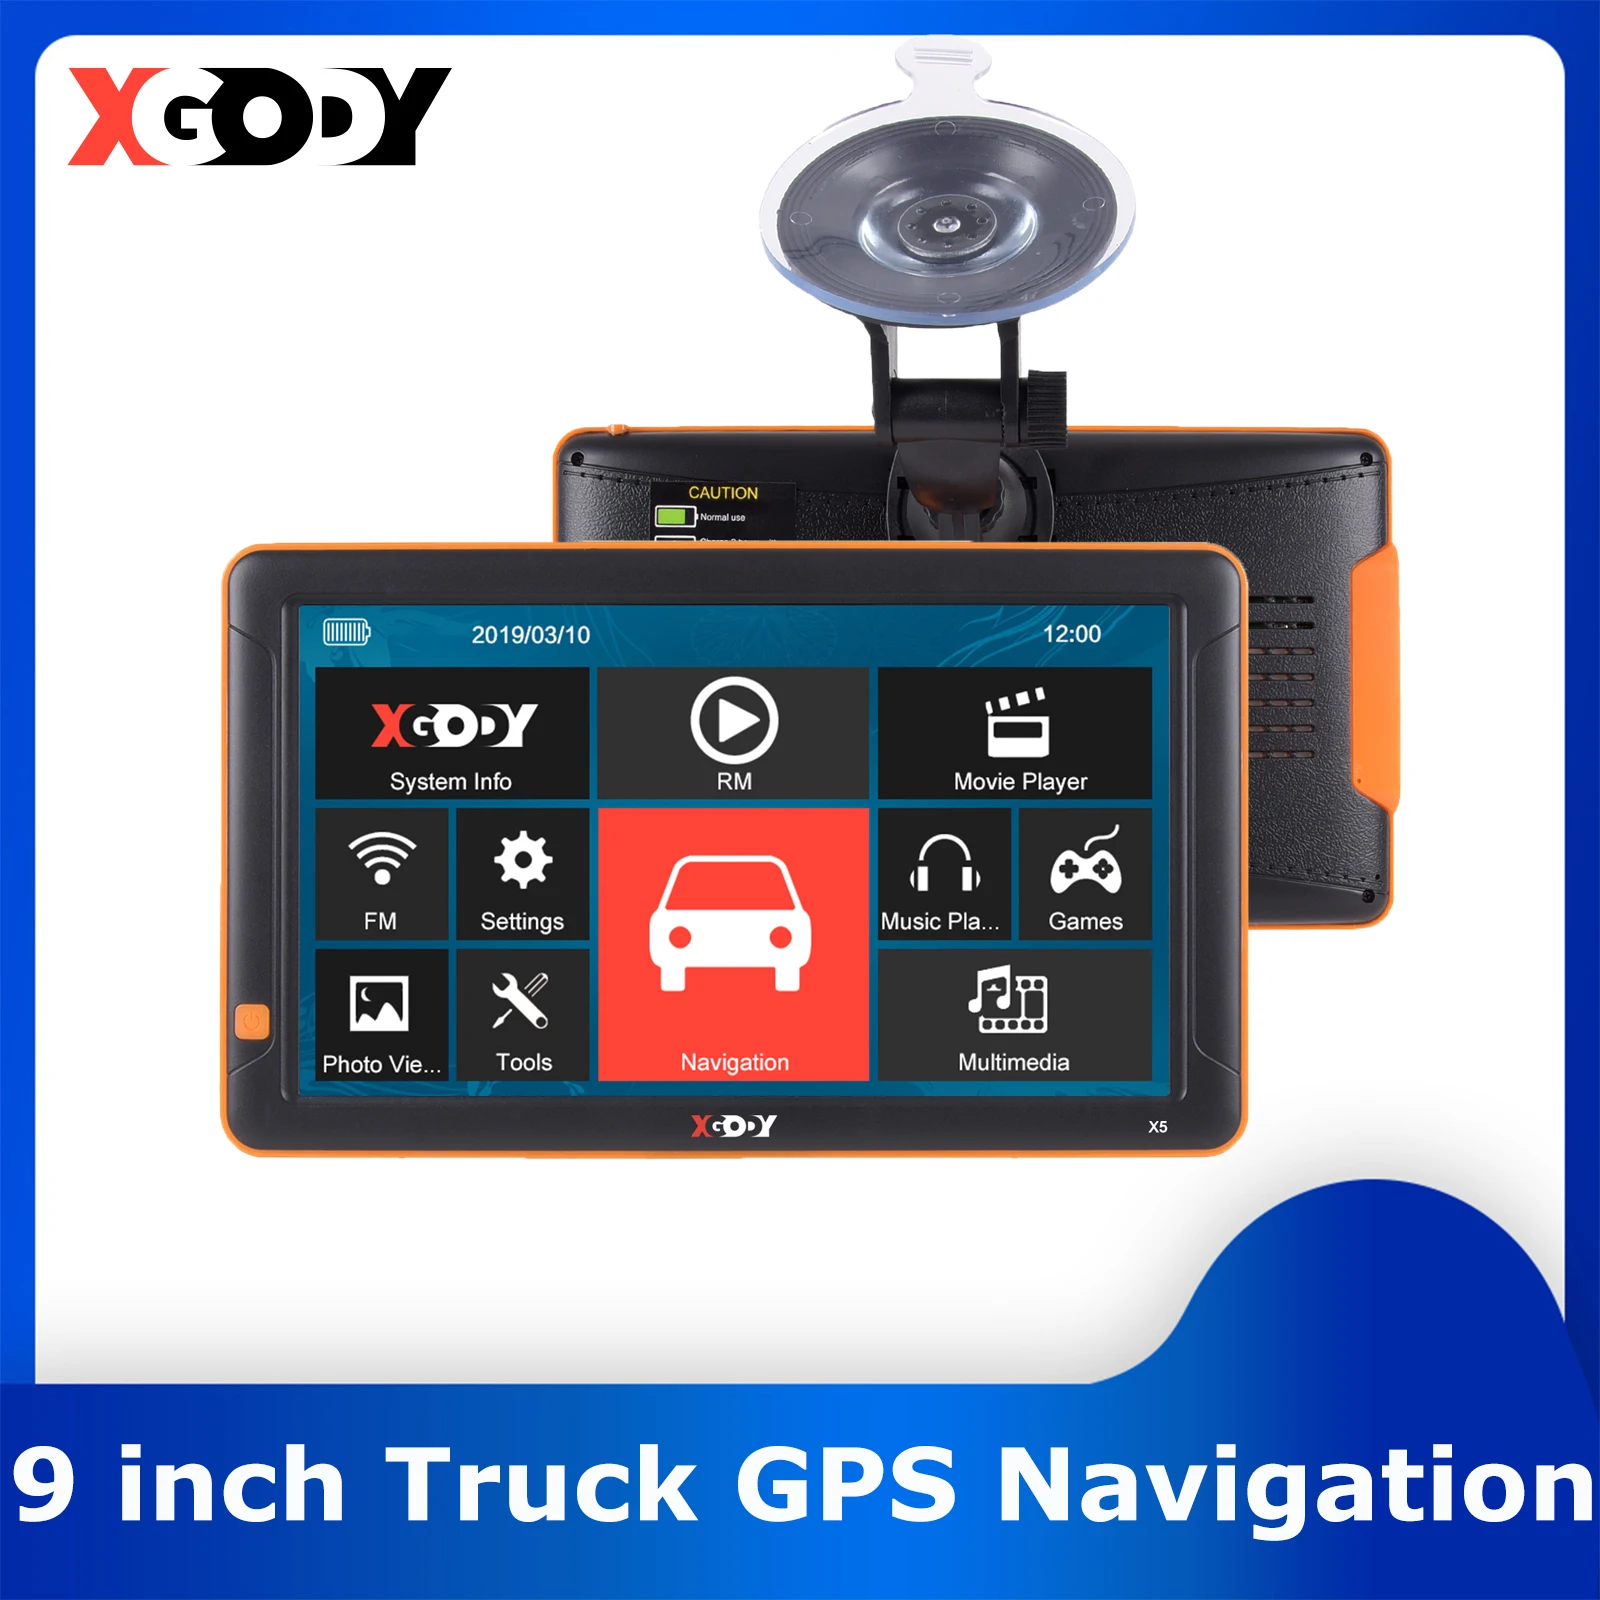 XGODY X5 9 inch Truck GPS Navigation Touch Screen 256M 8G Car GPS Navigator 2021 Europe America Map Sat Nav Russia Navitel